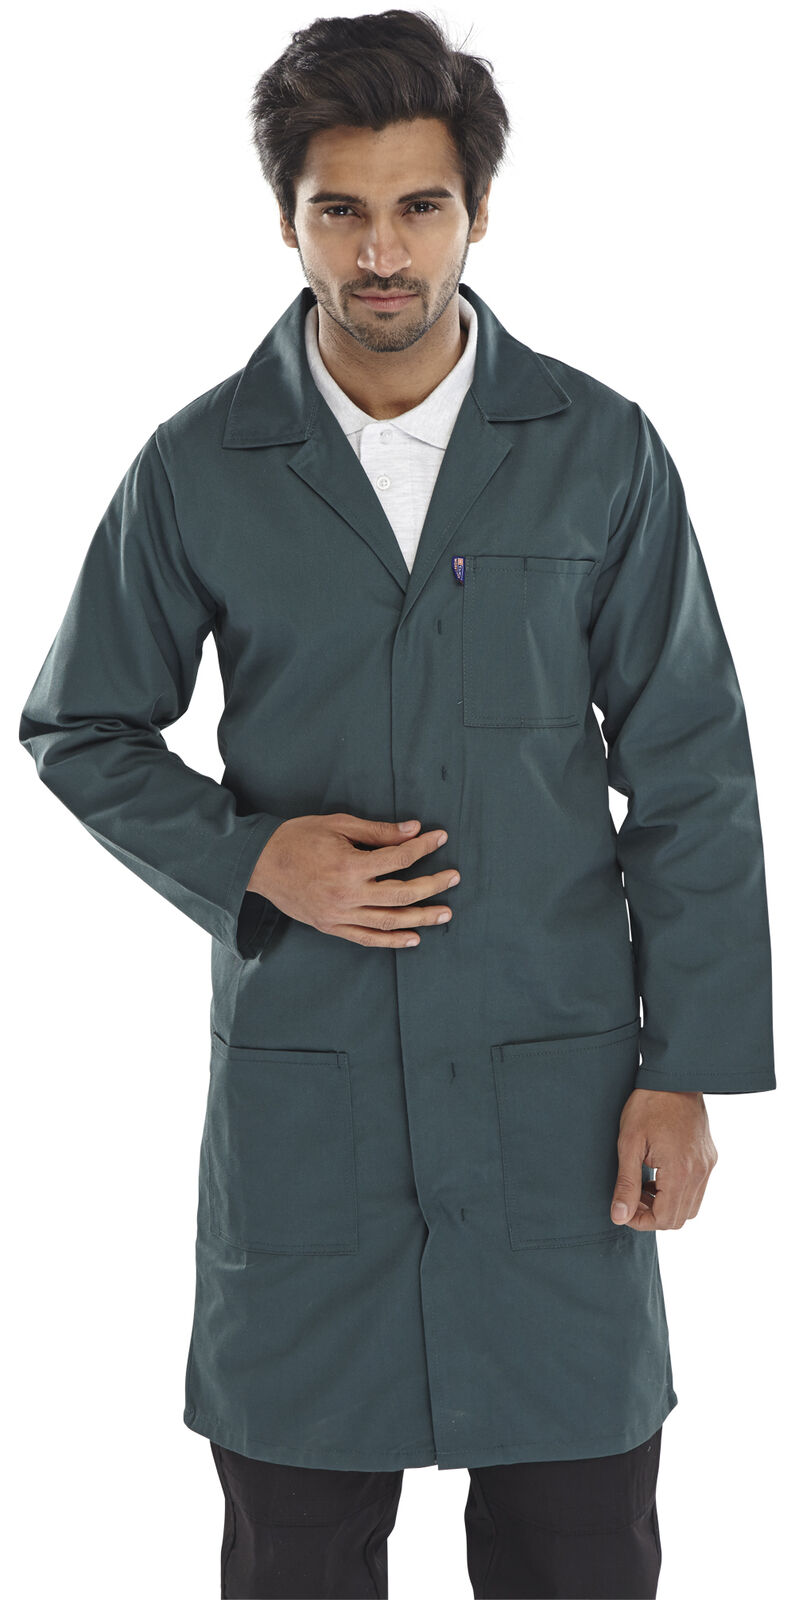 Click Warehouse Jacket Lab Coat White, Green, Navy or Royal Blue